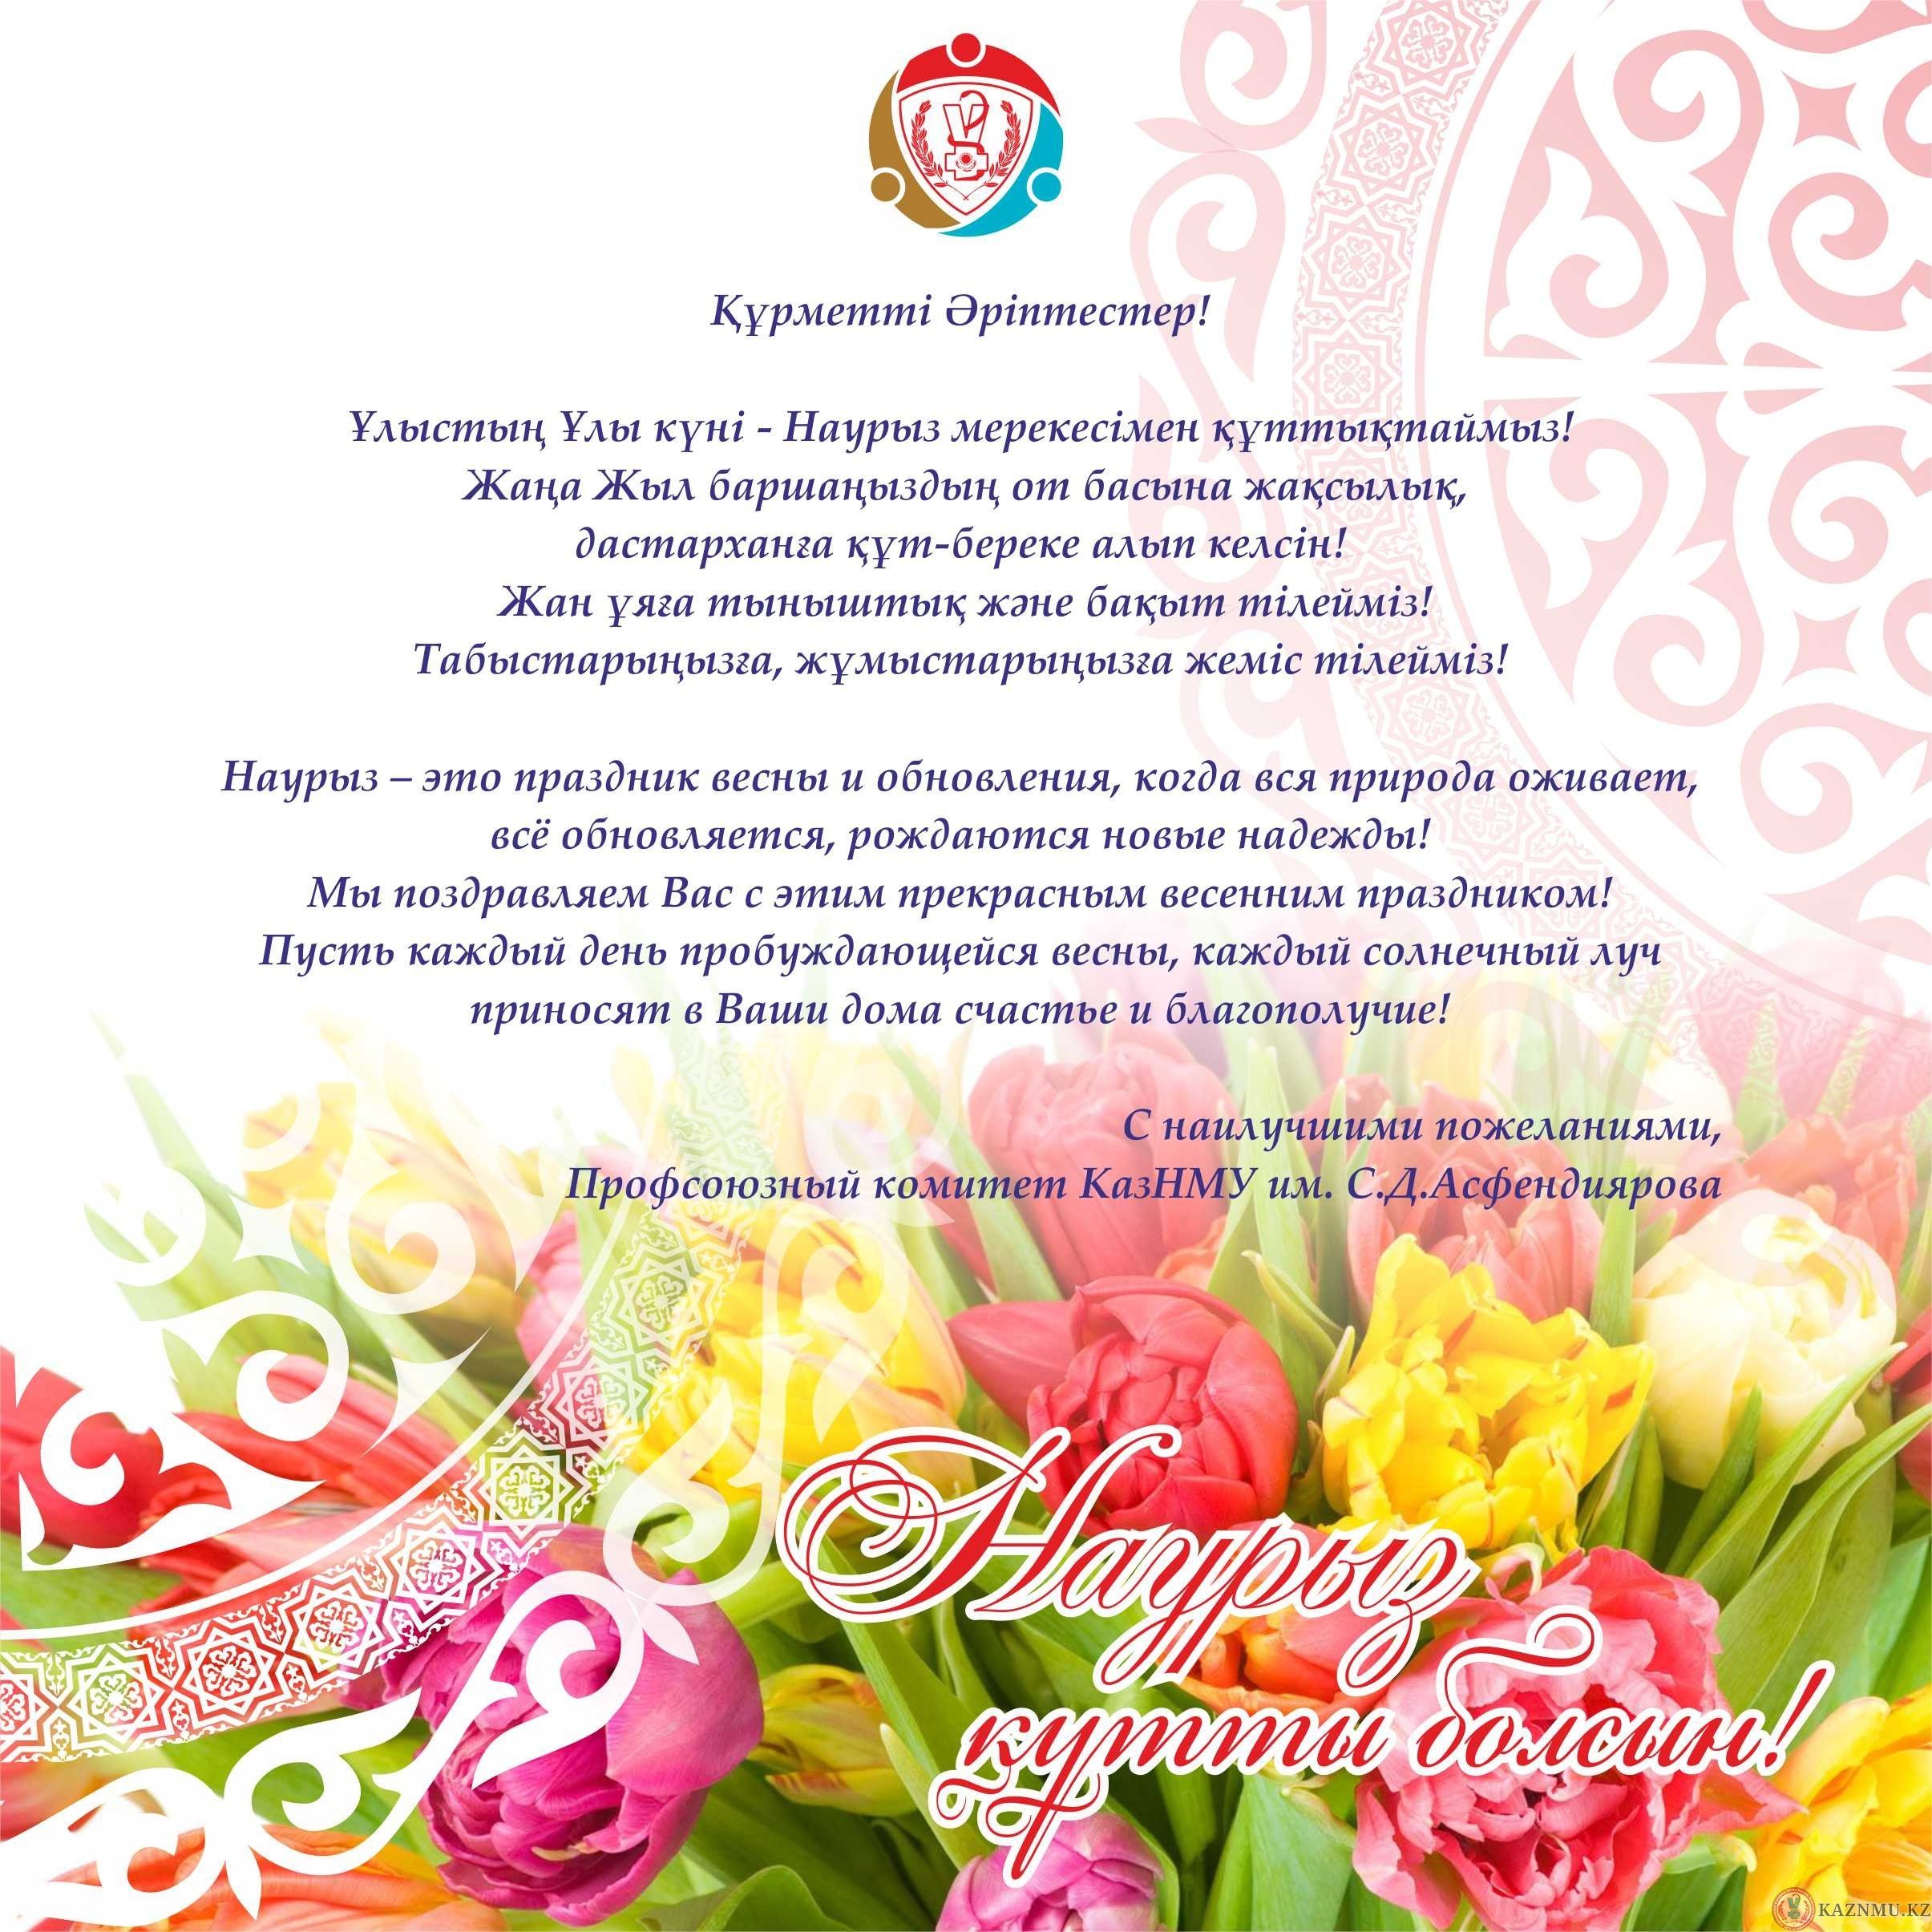 Наурыз құттықтау хат. Наурыз поздравление. Наурыз открытки. Поздравление на казахском языке. Поздравляю с днём рождения на казахском языке.